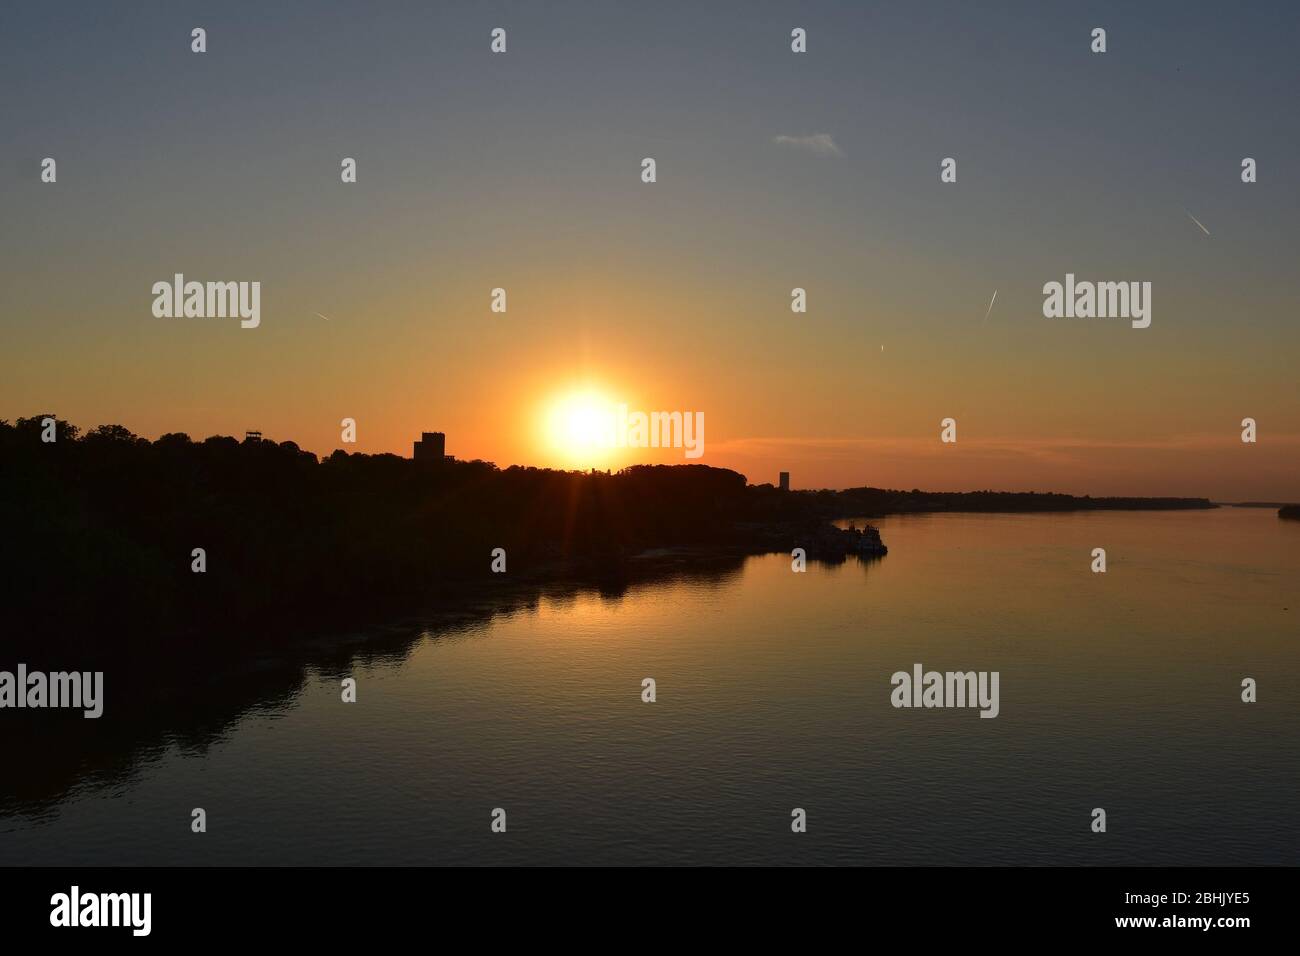 Sunset orange over the Danube River. Romantic atmosphere Stock Photo